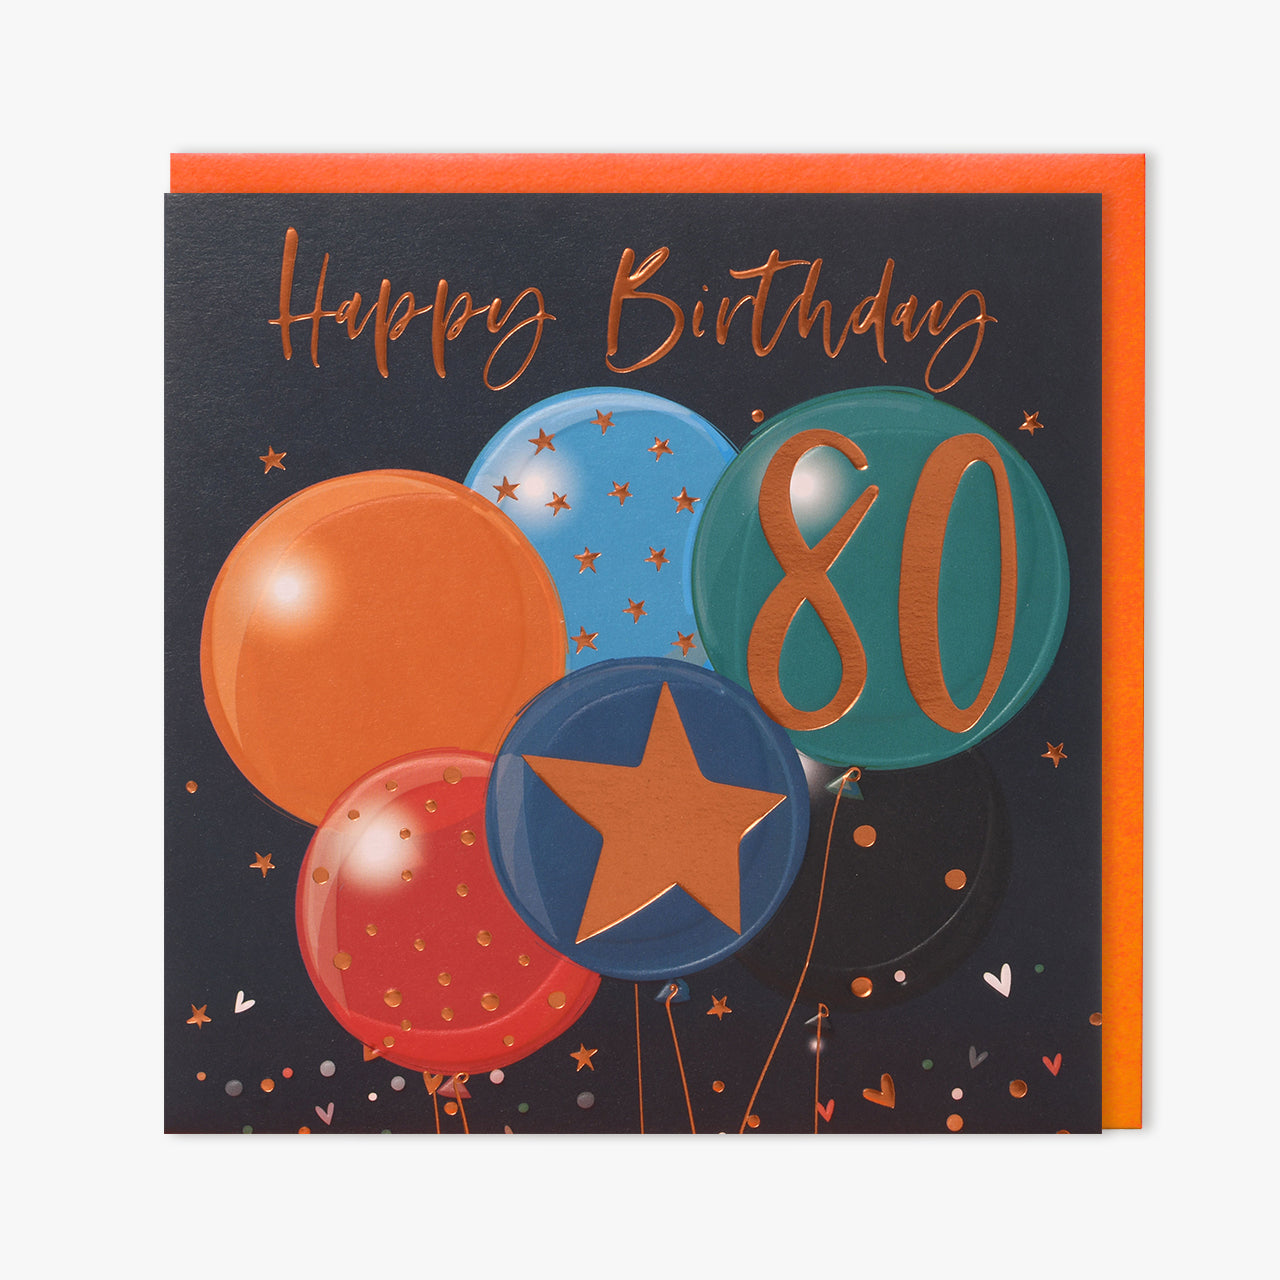 Age 80 Birthday Cards